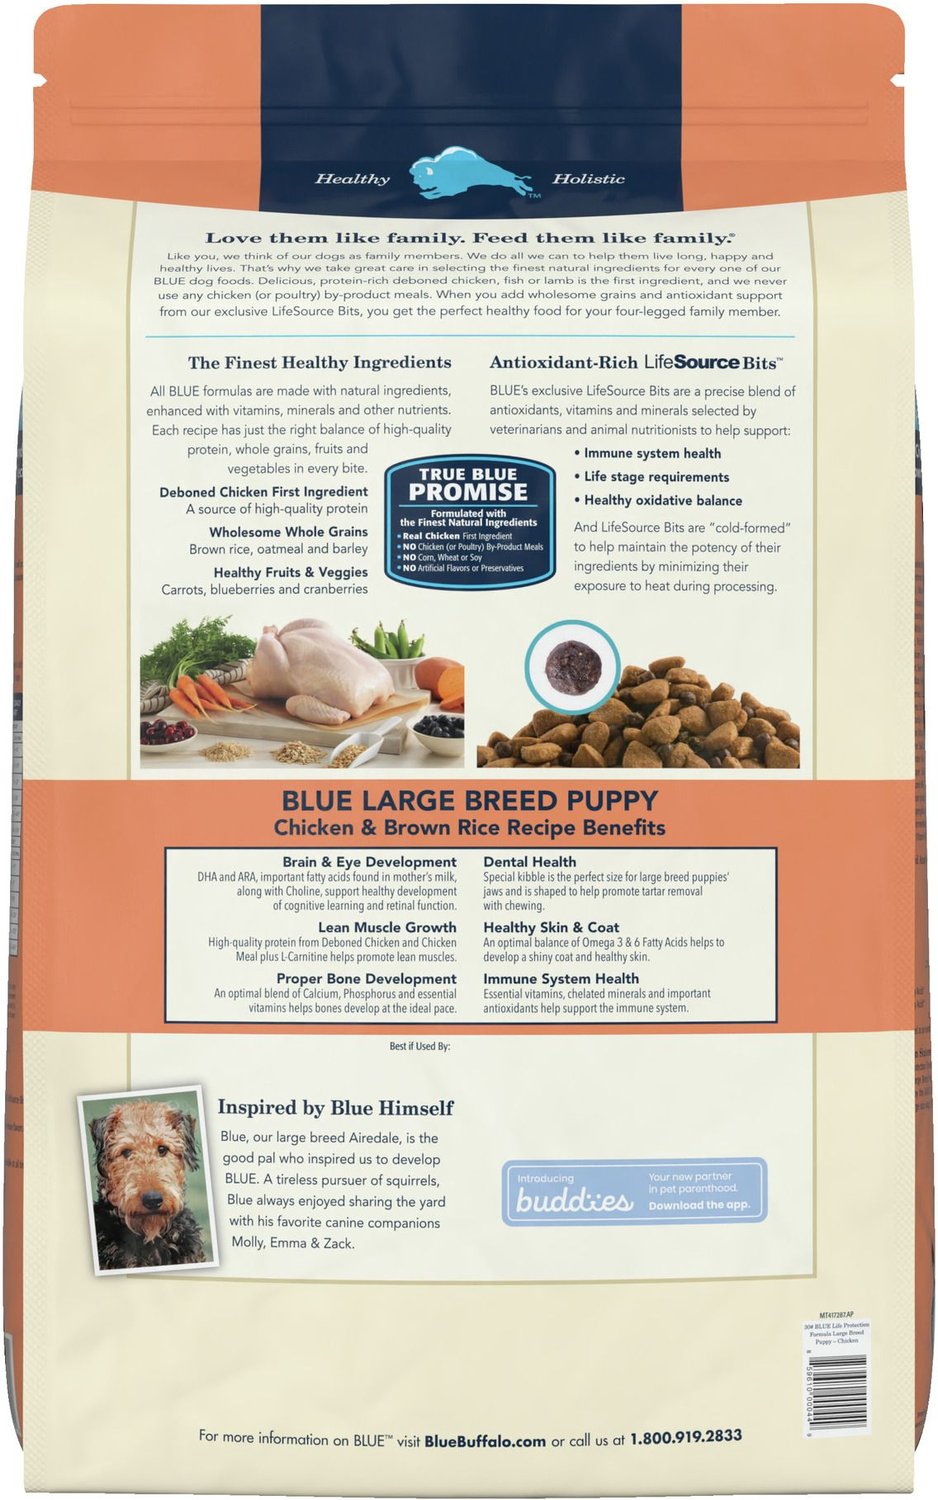 Blue Buffalo Large Breed Dog Food Feeding Chart